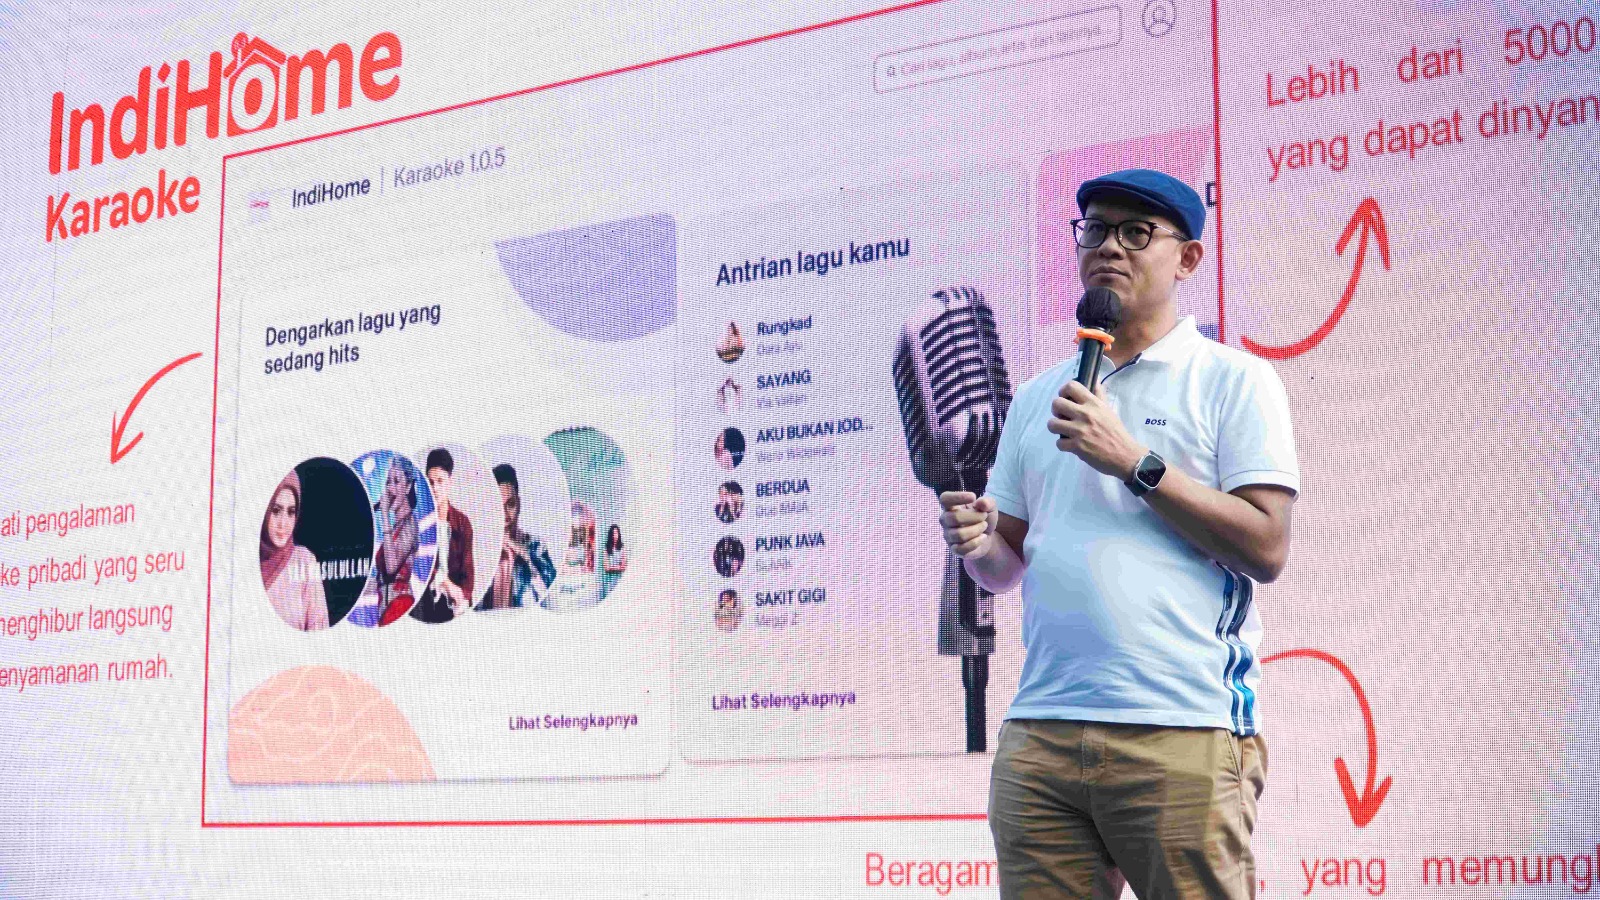 Layanan Digital IndiHome Karaoke, Hadirkan Pengalaman Karaoke Interaktif dan Menarik, Ada 5.000 Pilihan Lagu